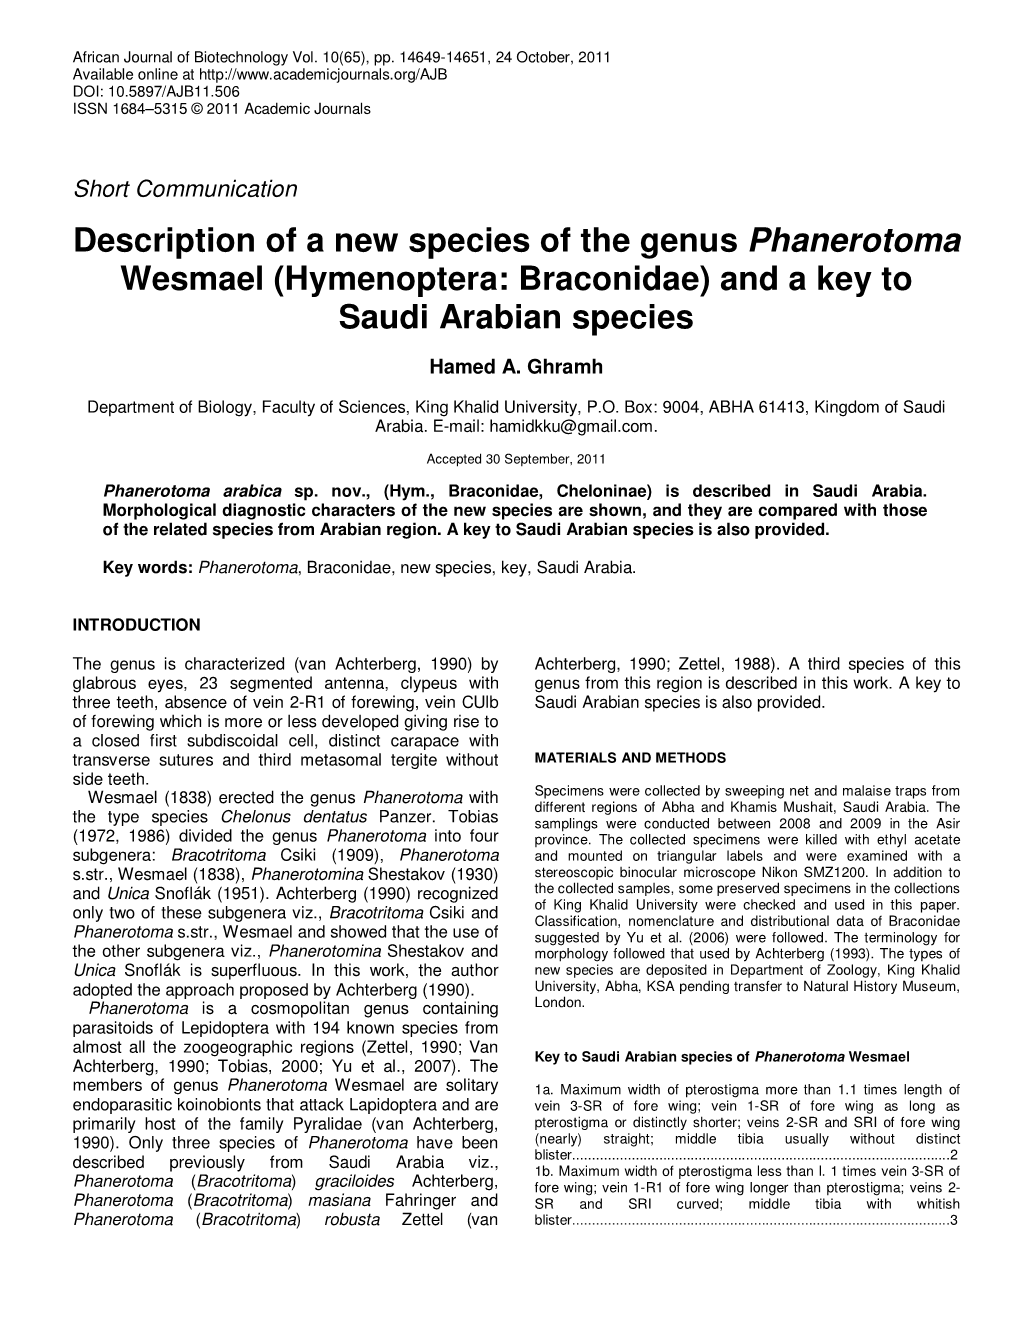 Description of a New Species of the Genus Phanerotoma Wesmael (Hymenoptera: Braconidae) and a Key to Saudi Arabian Species